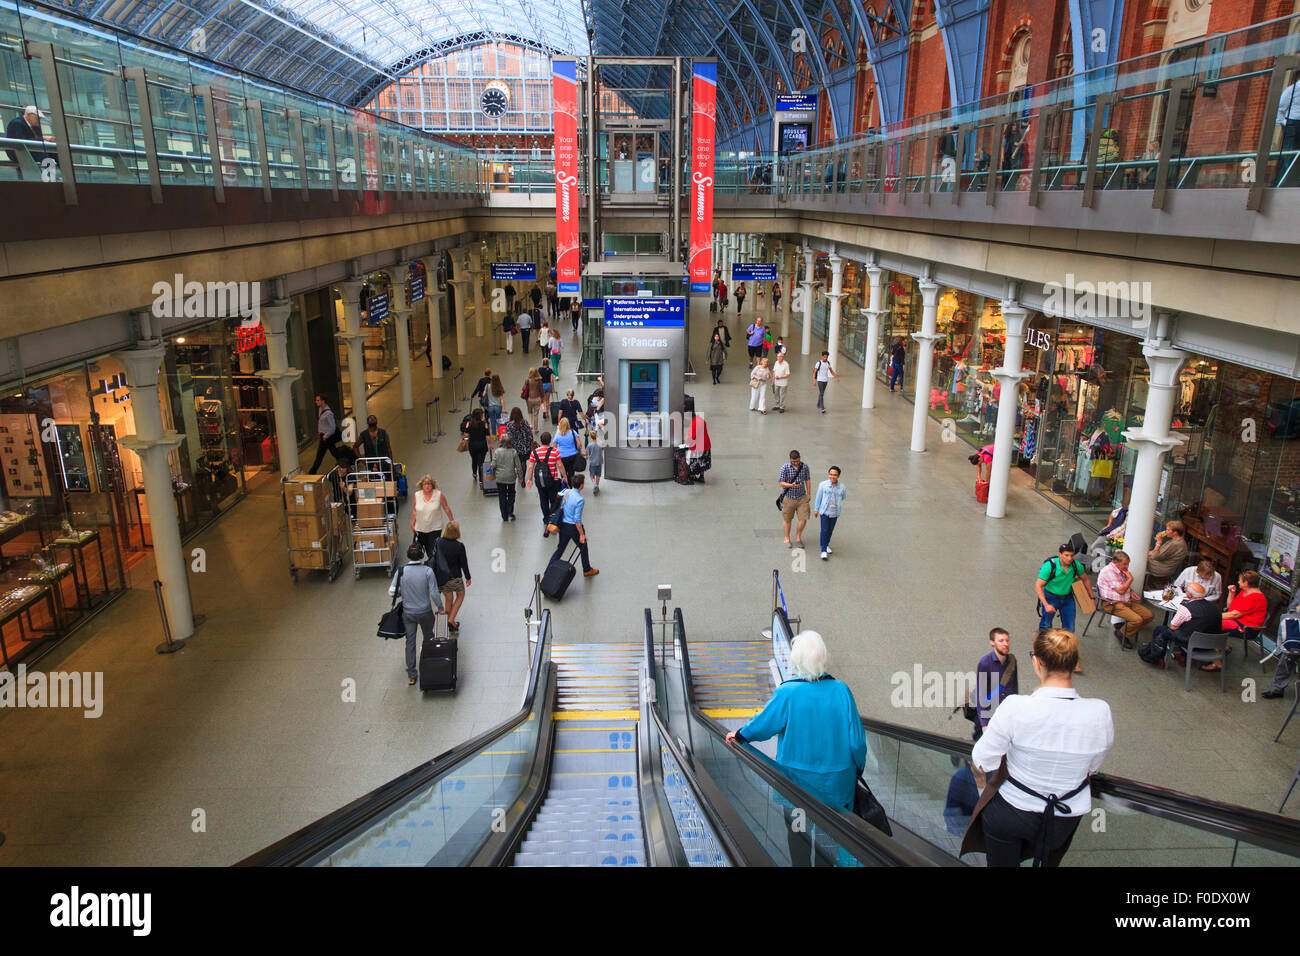 Escalators and shops inside St Pancras Railway Station London Stock Photo